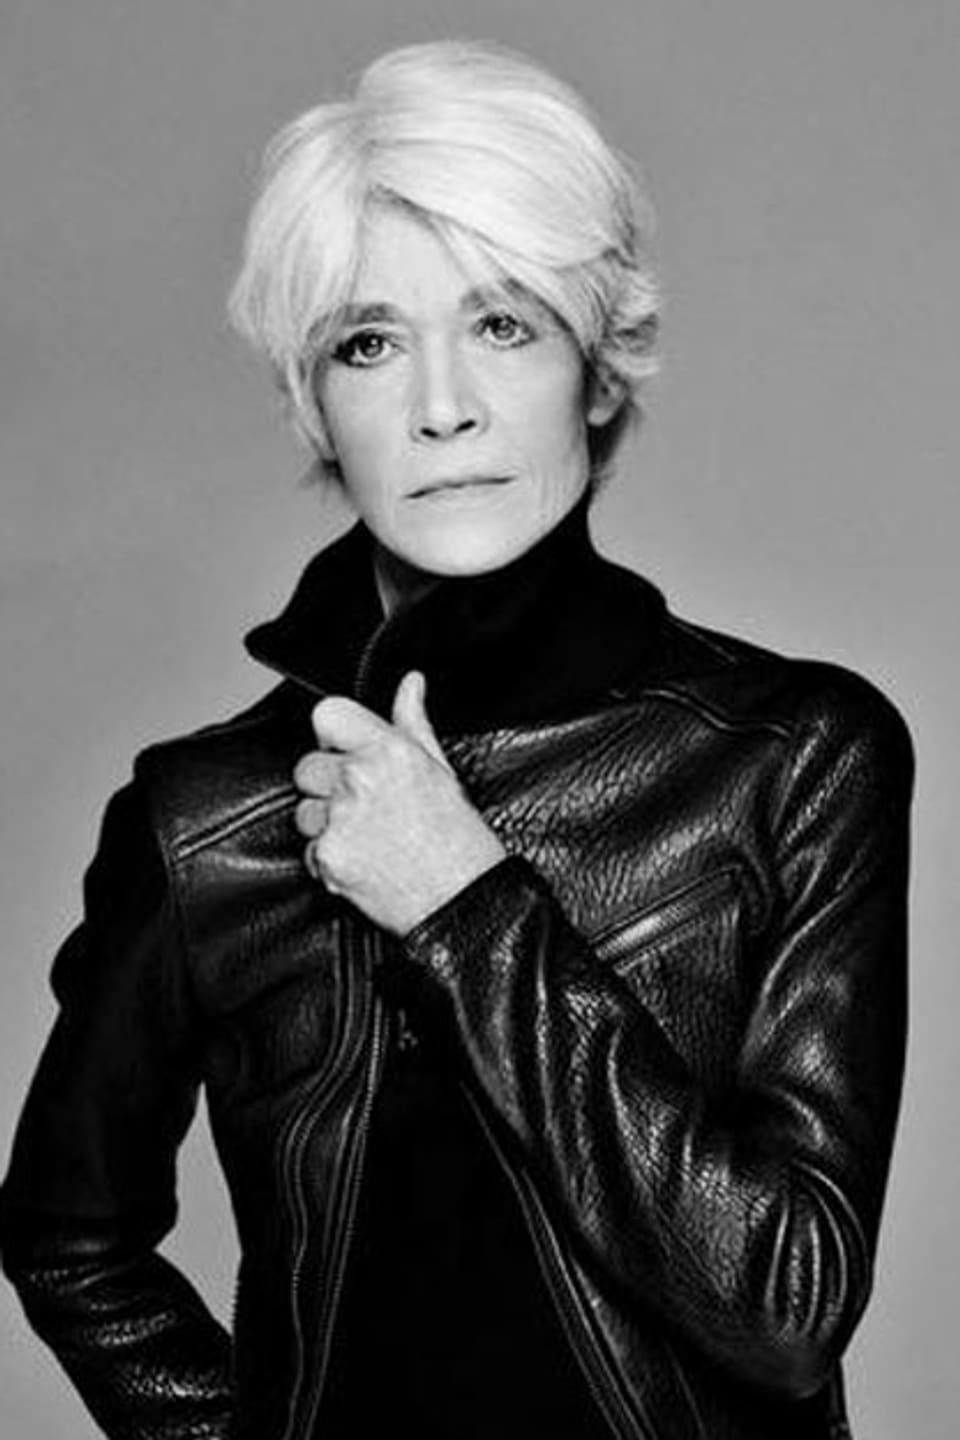 Françoise Hardy heute mit enger schwarzer Lederjacke und traurigem Blick.